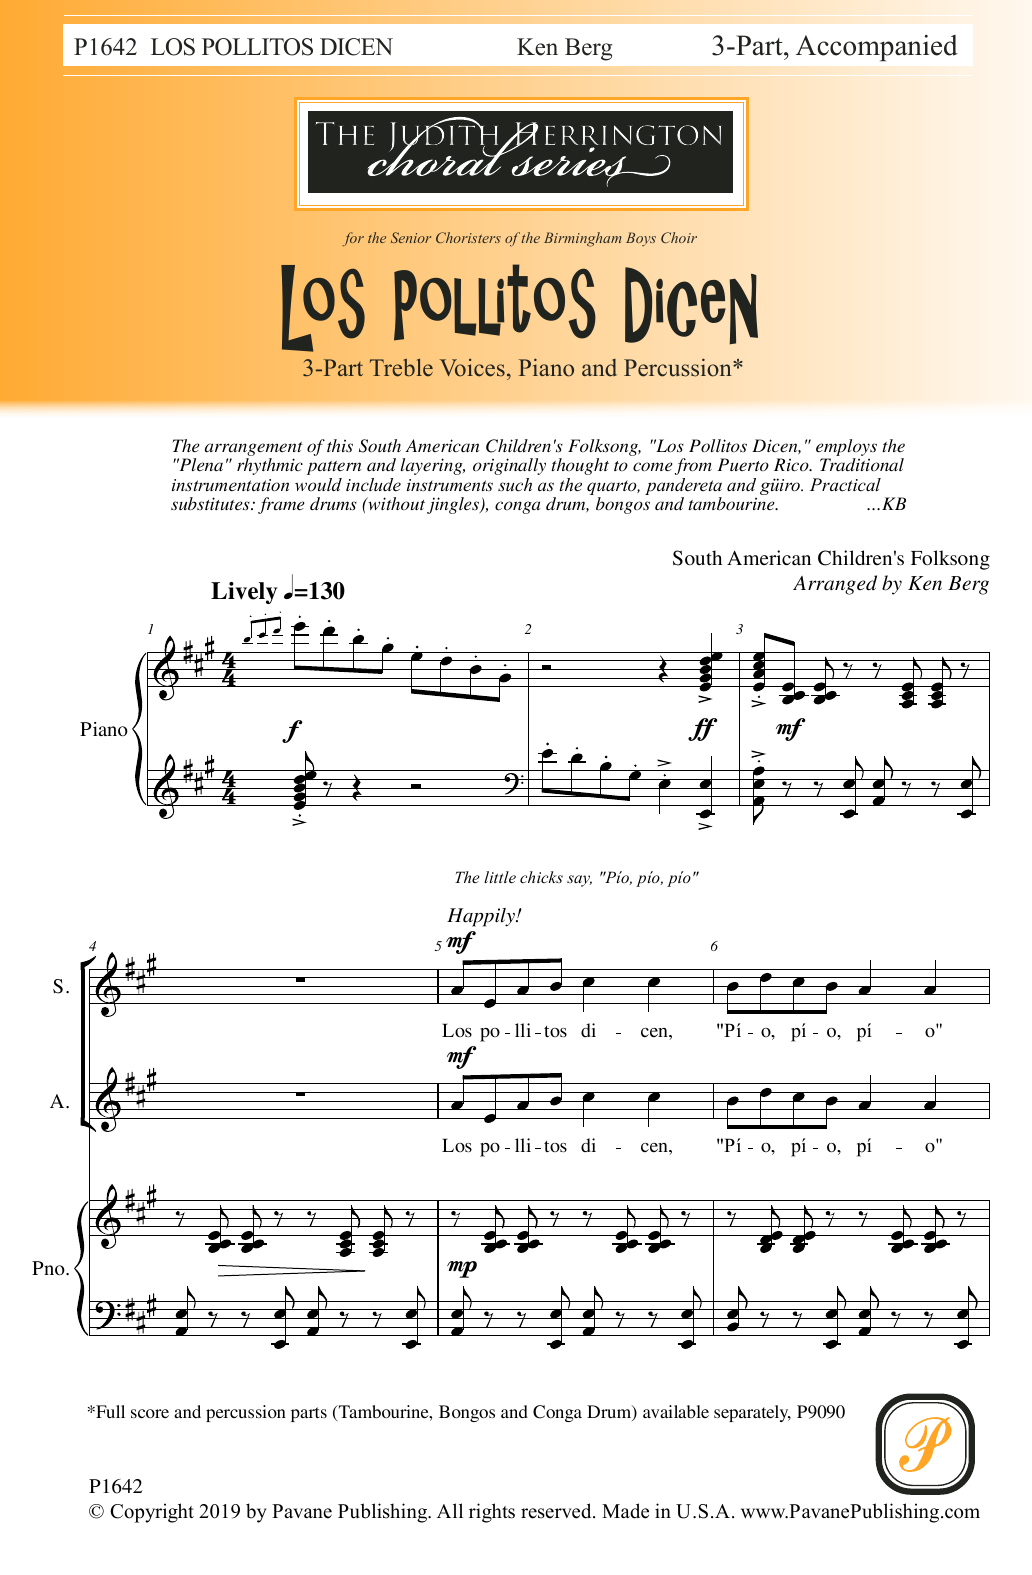 Download South American Children's Folksong Los Pollitos Dicen (Ken Berg) Sheet Music